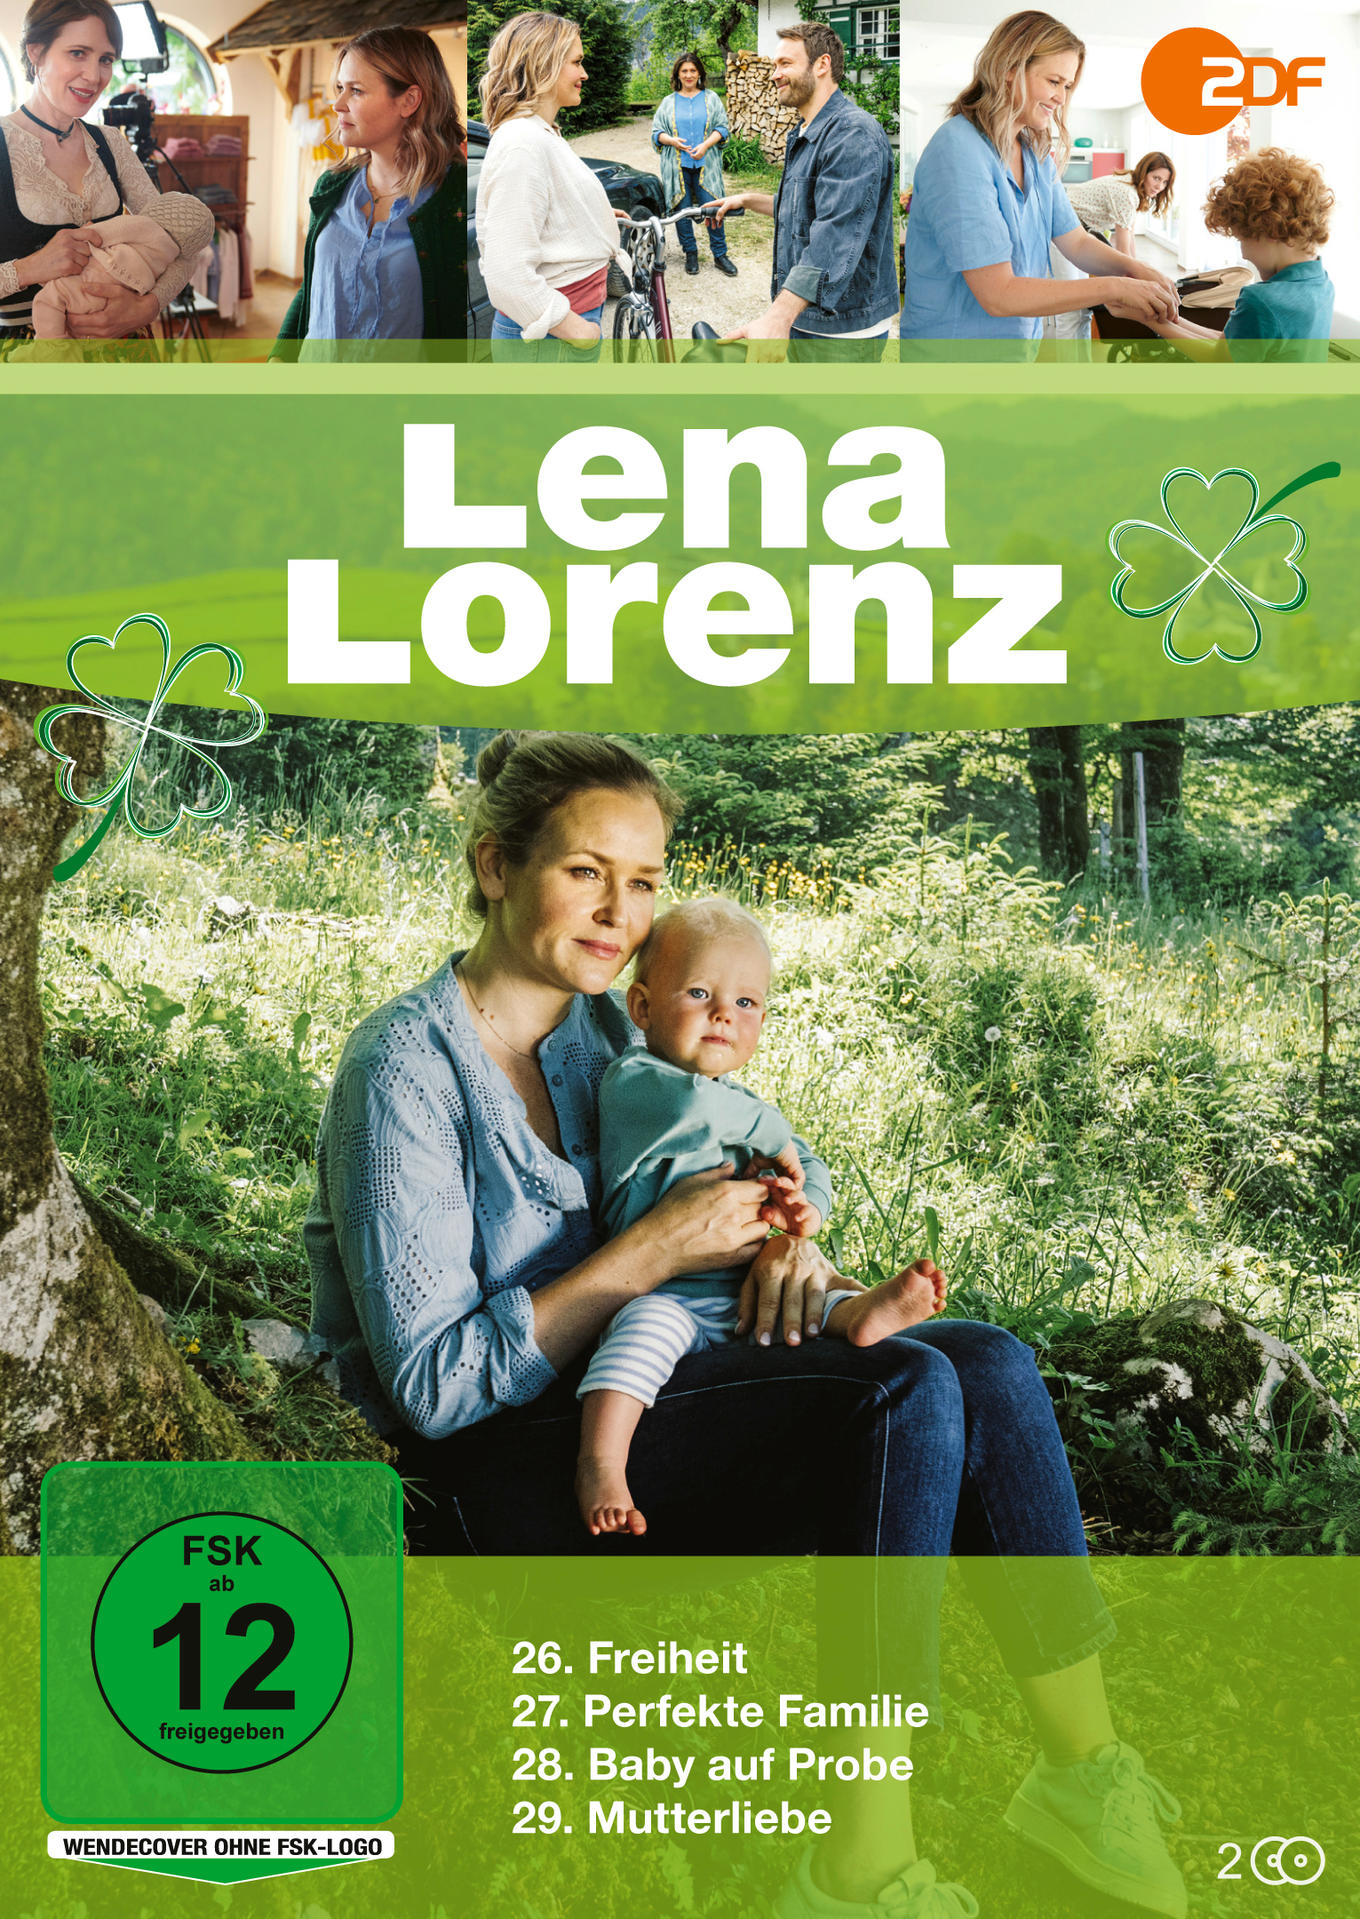 8 Lorenz DVD Lena